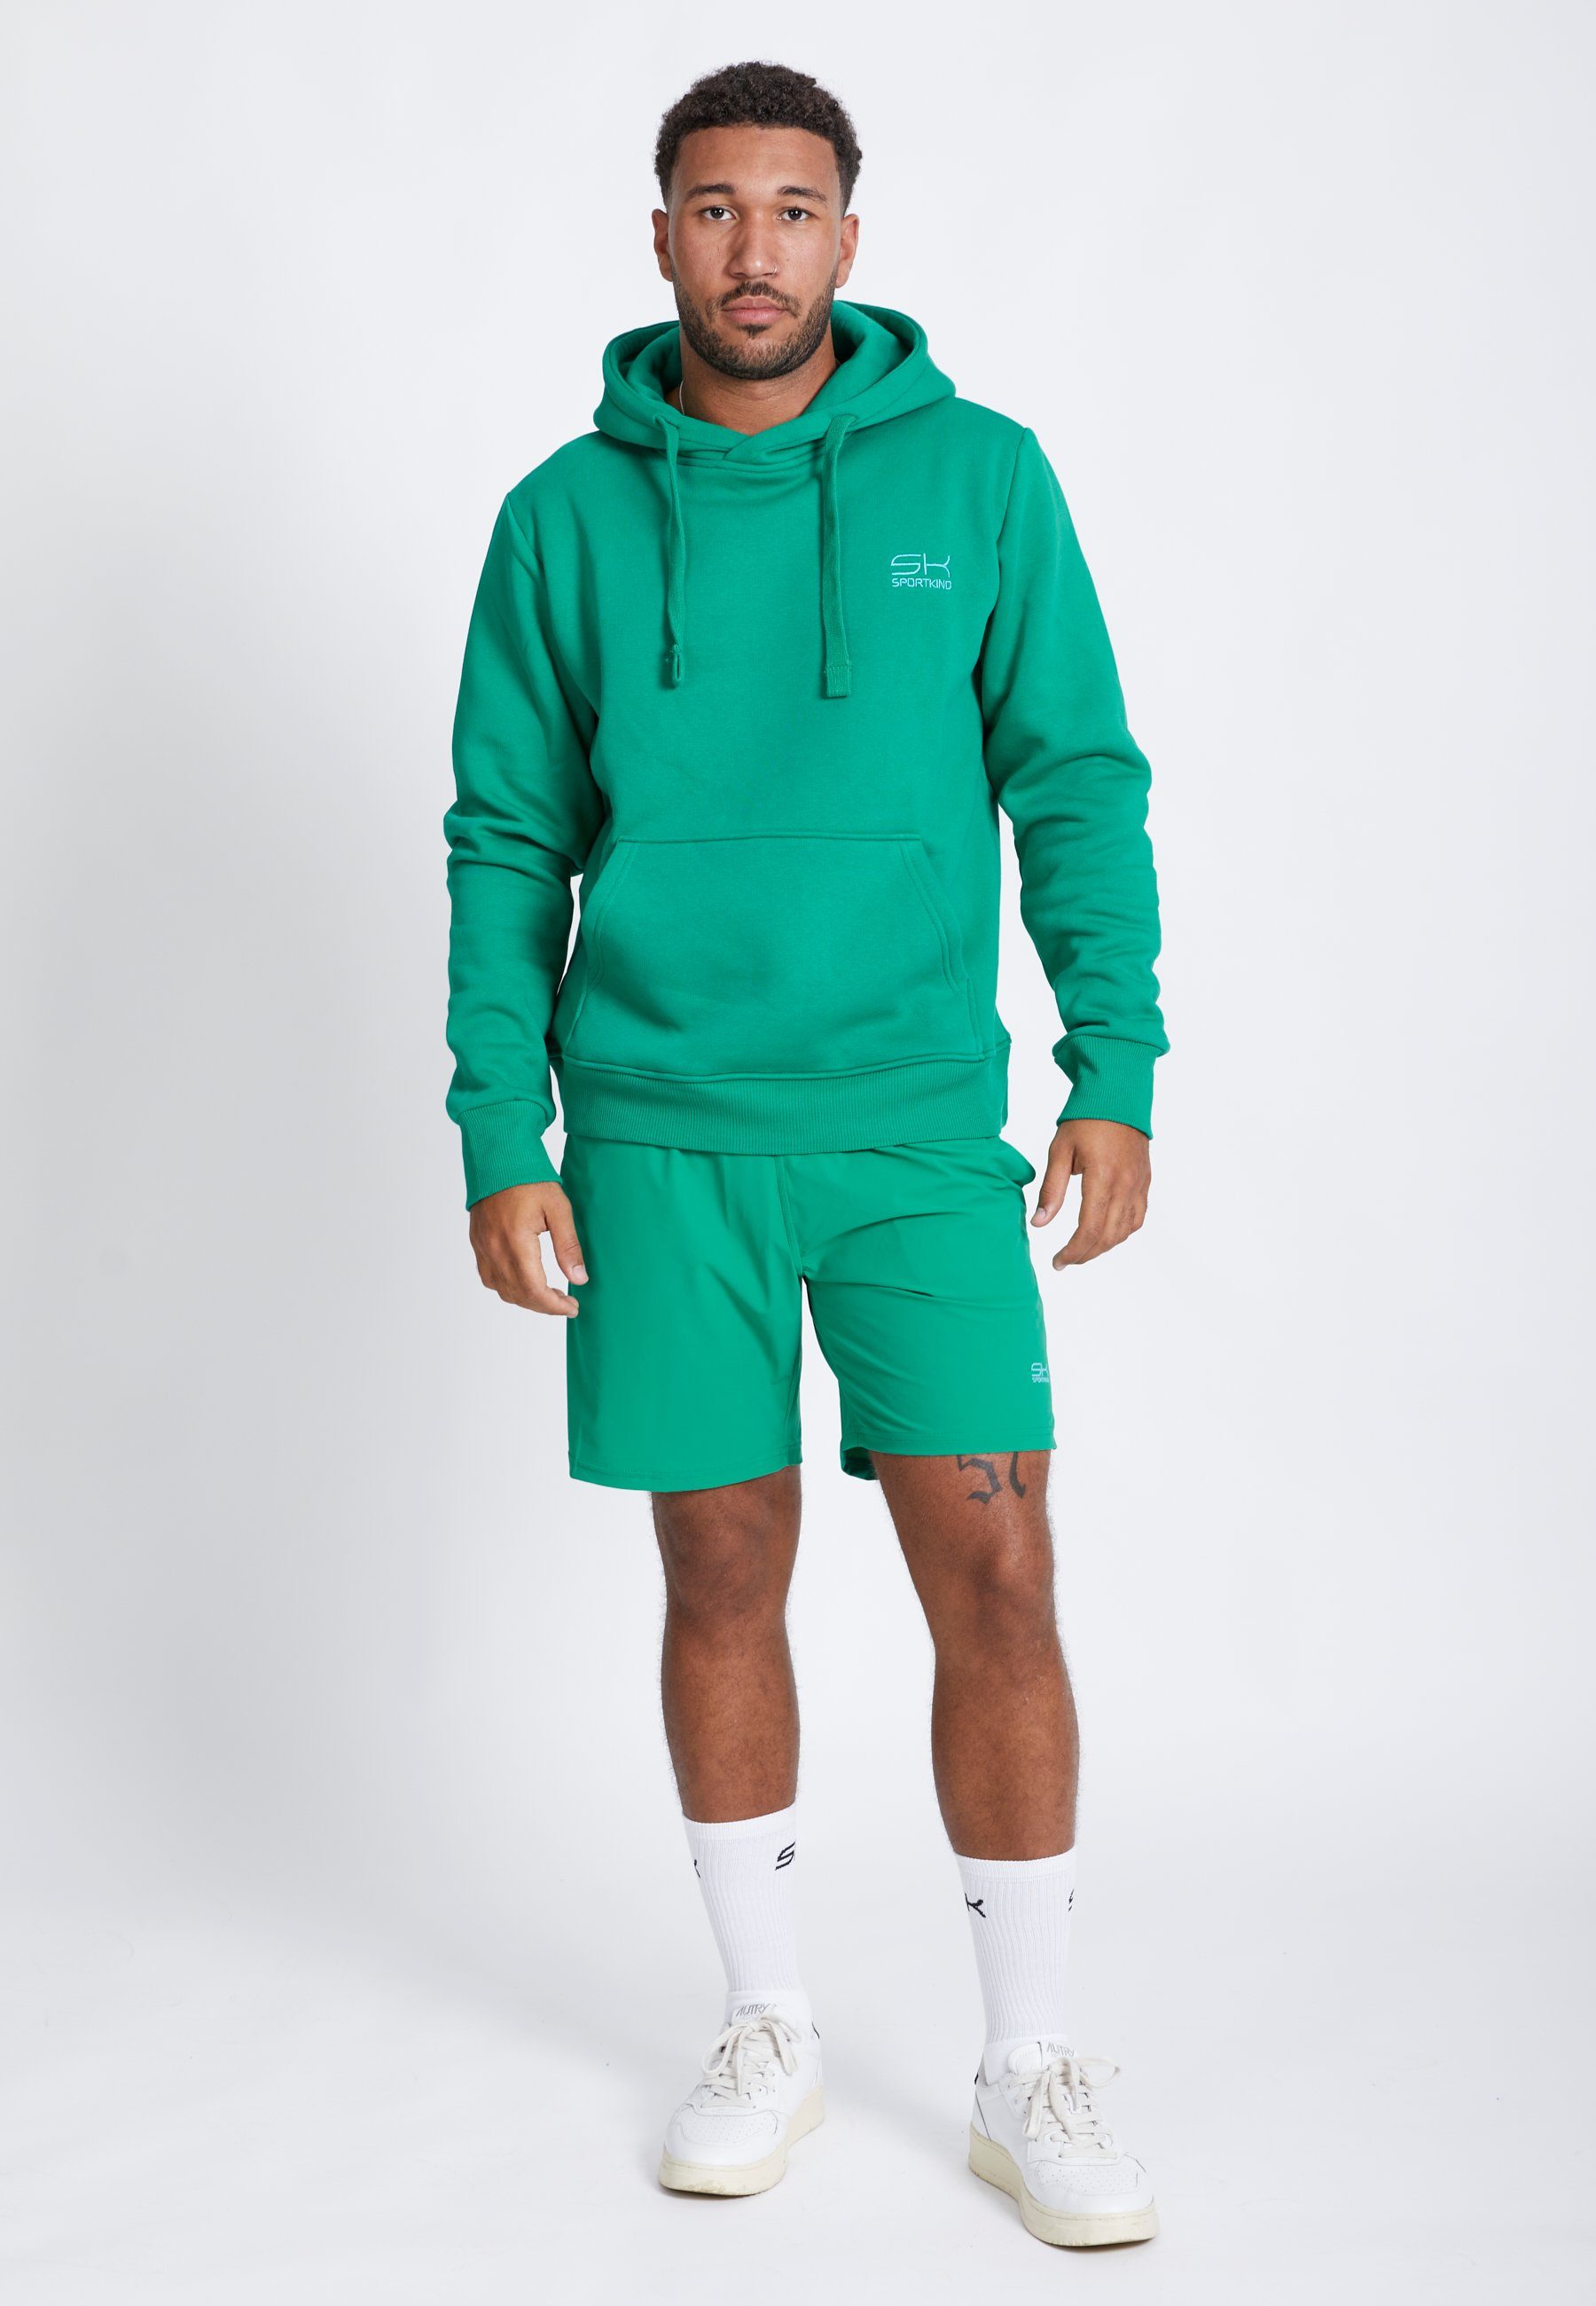 grün smaragd Kapuzensweater SPORTKIND unisex Hoodie